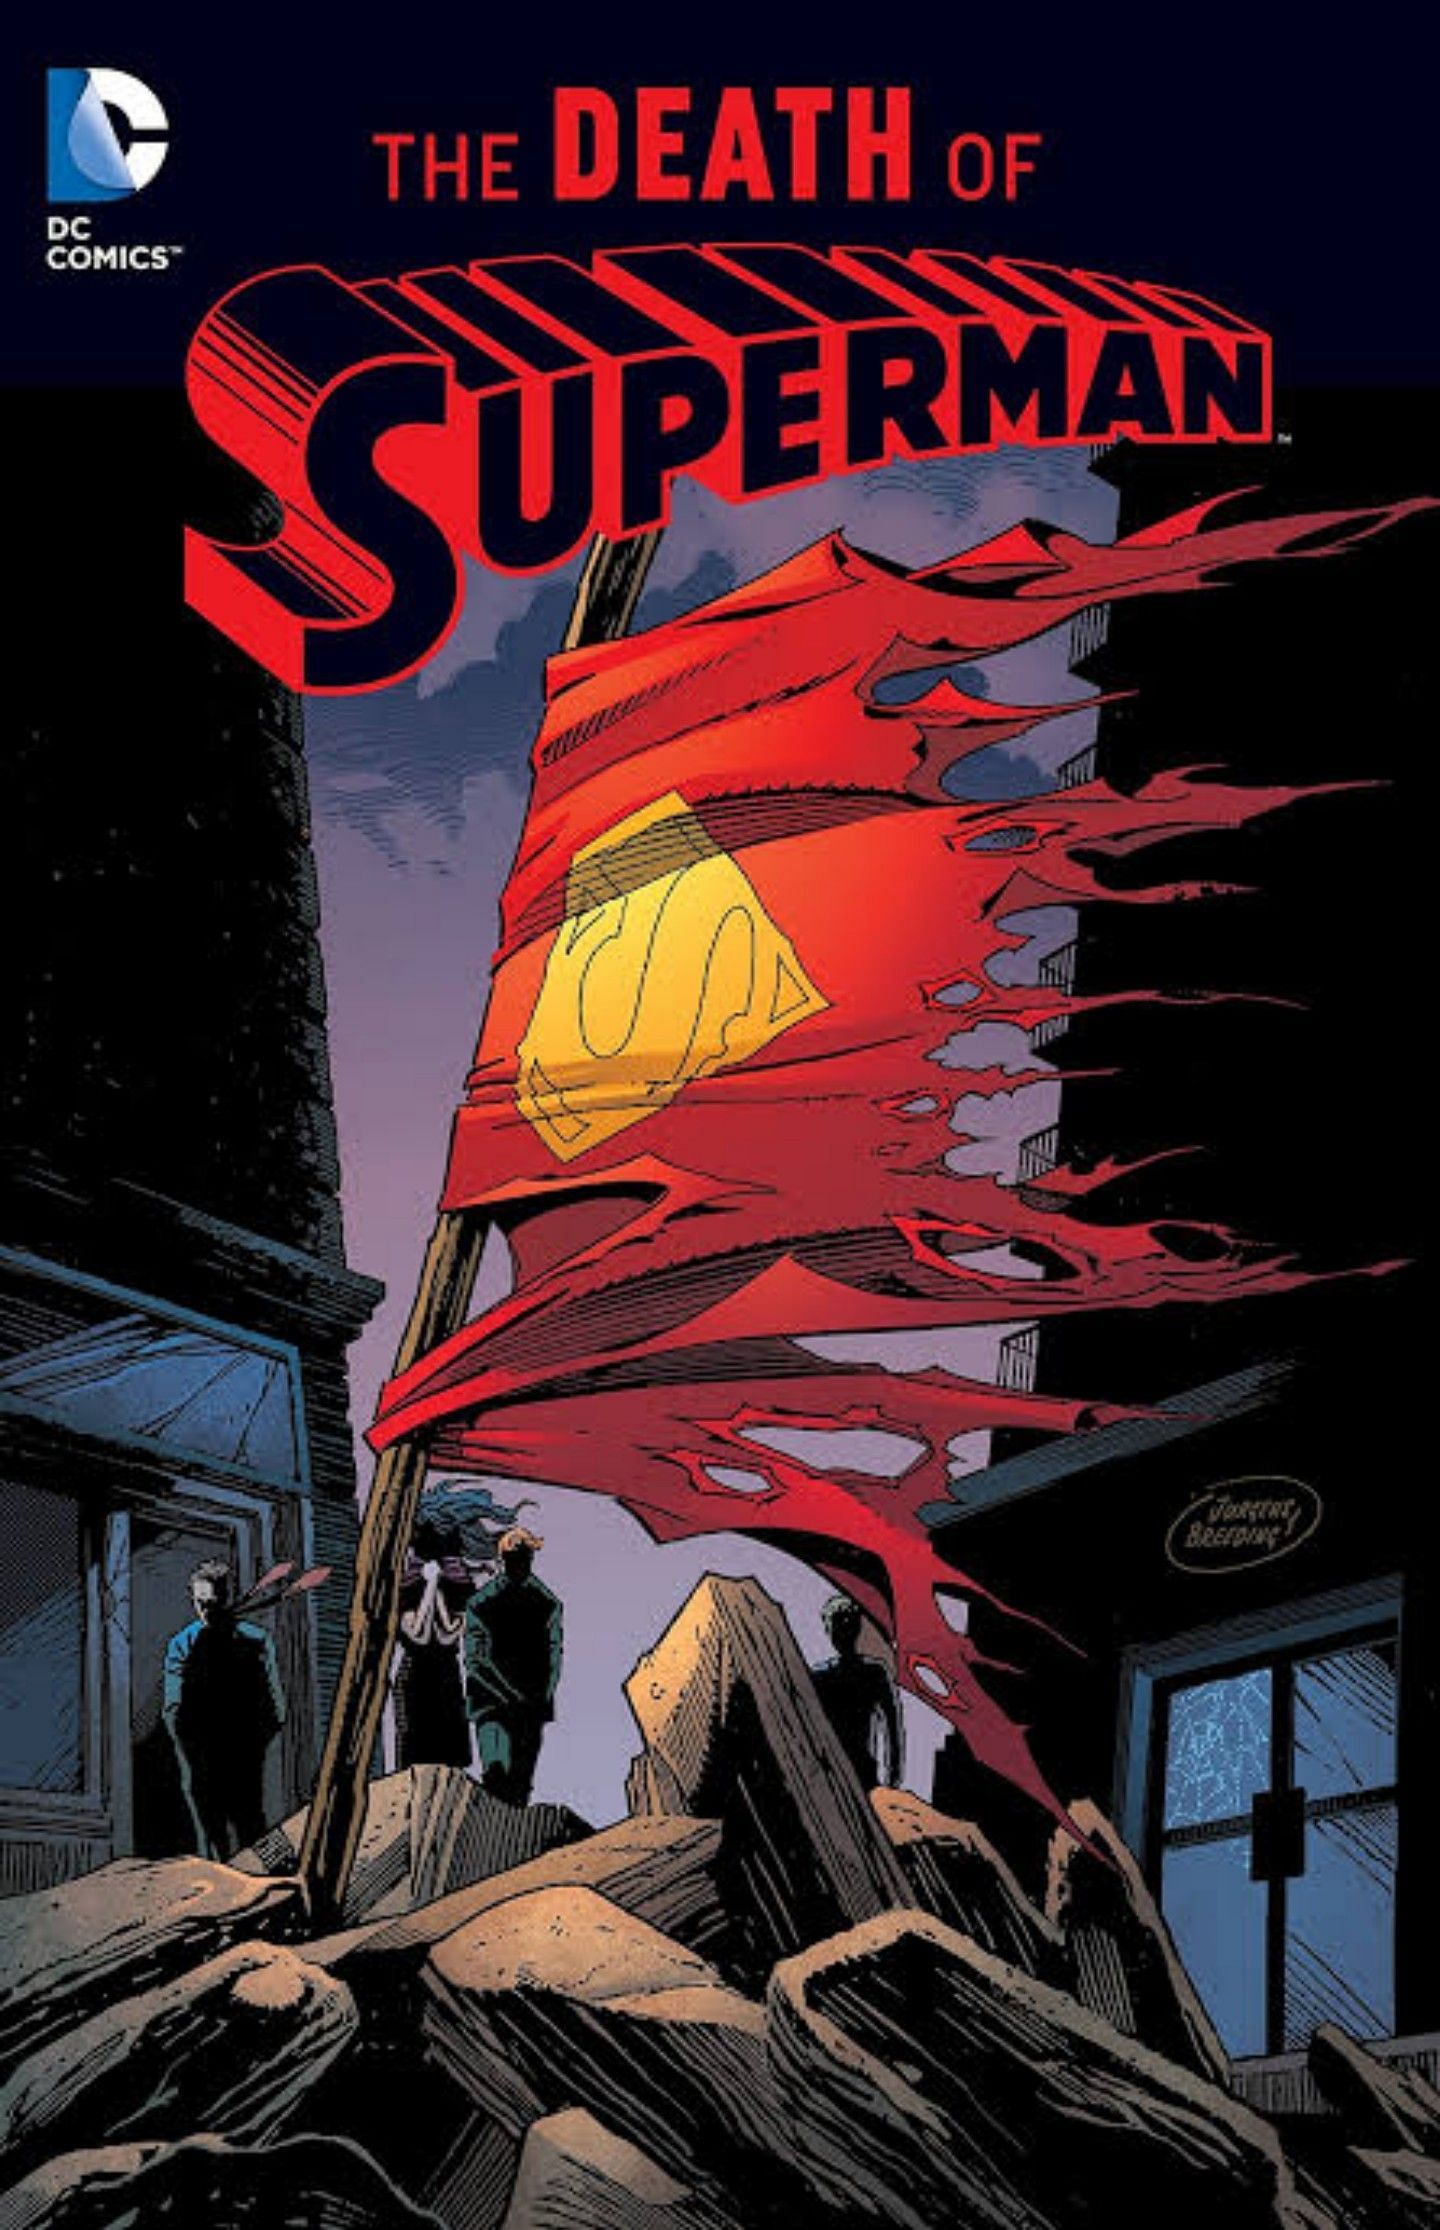 The Death of Superman comic cover (Image via DC Comics)